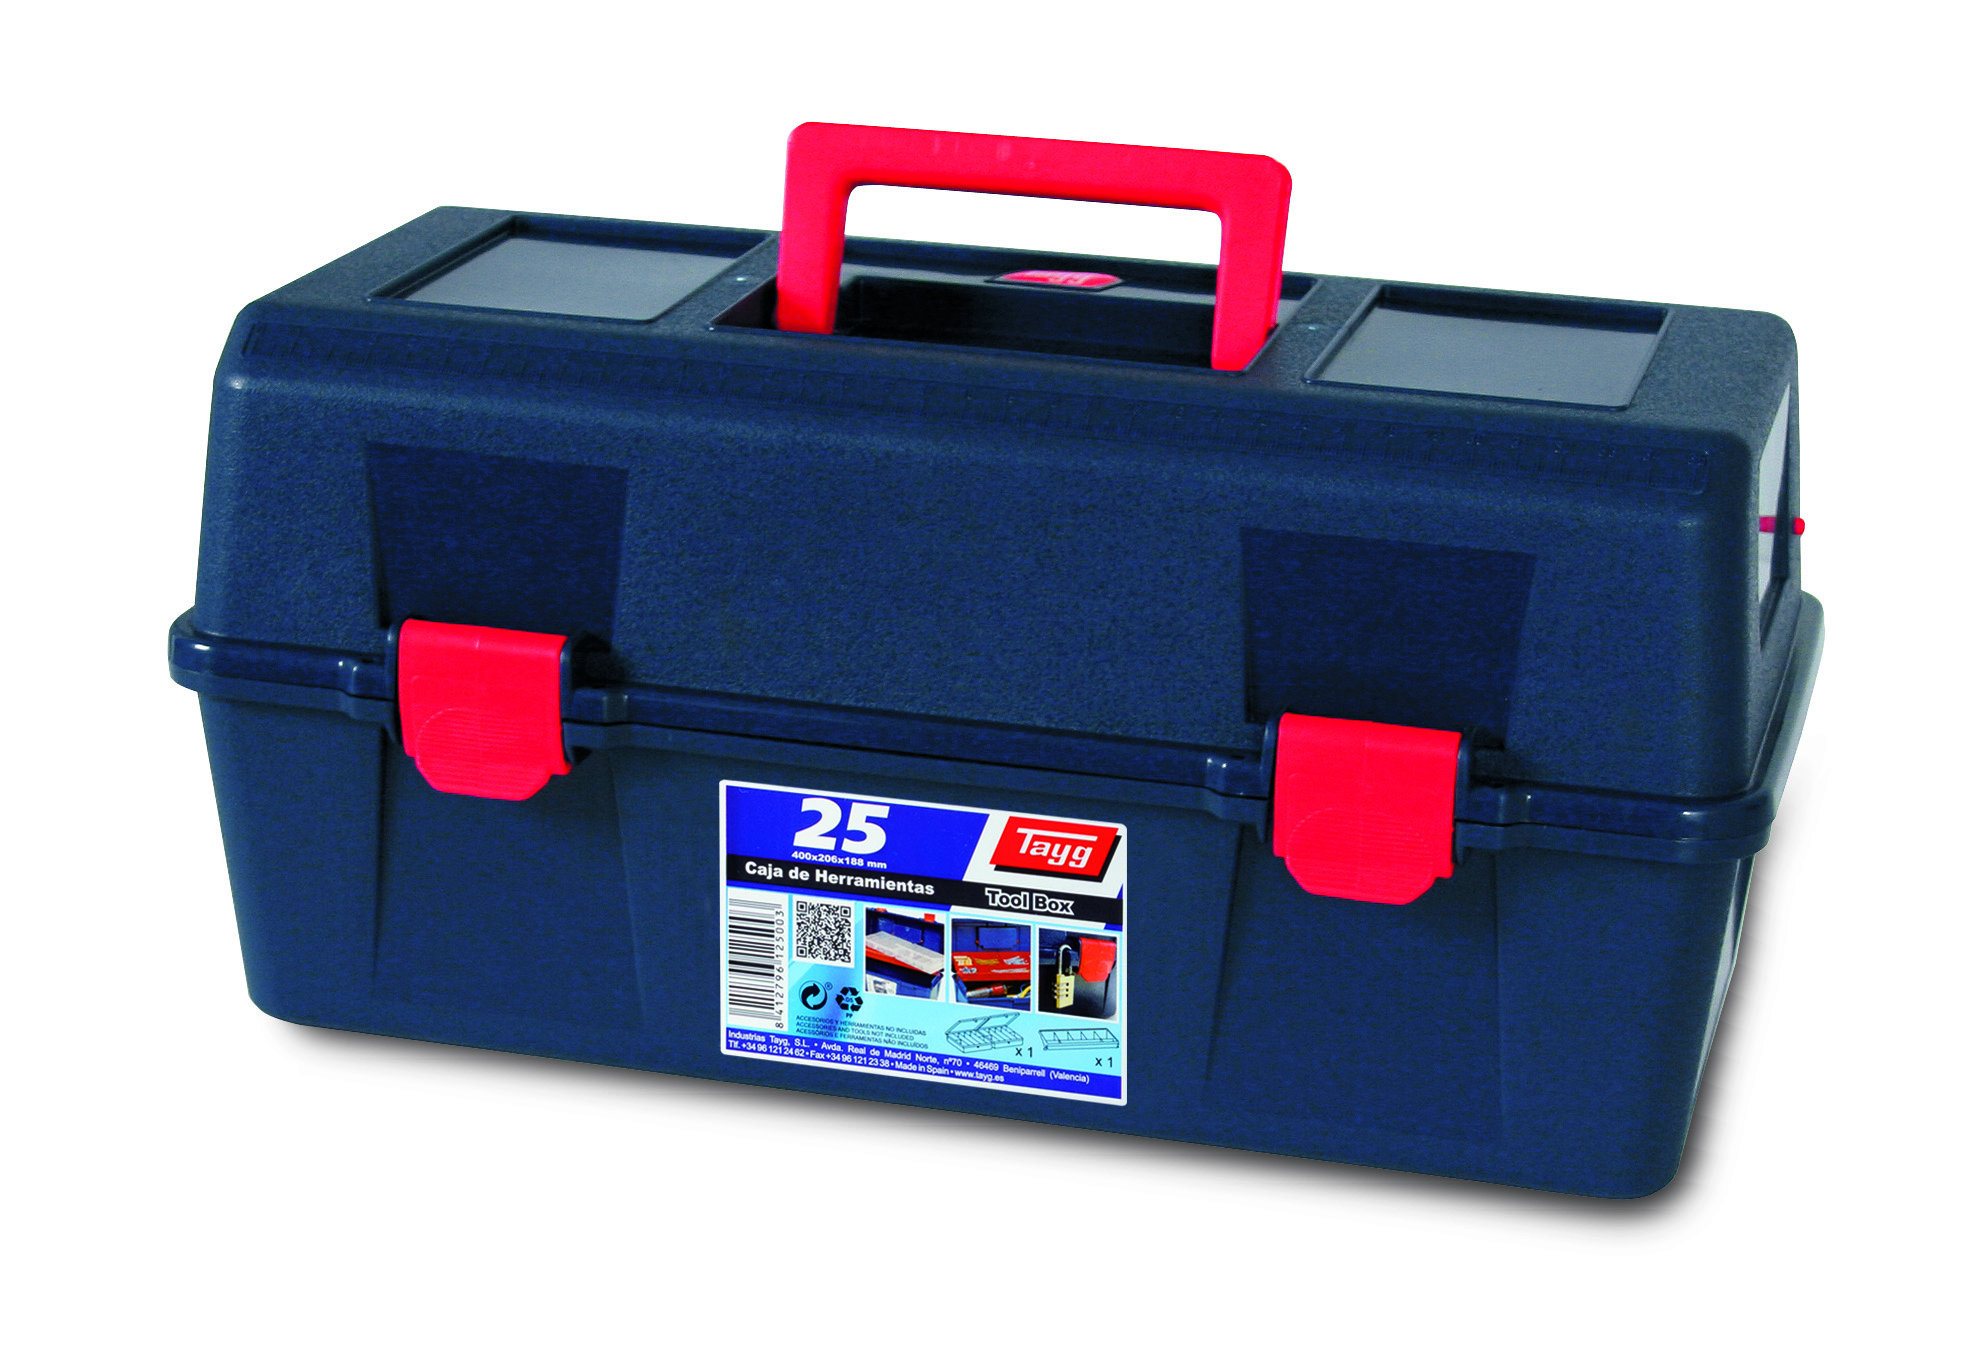 Ящик пластиковый для инструментов Tayg Box 25 Caja htas, с 2 органайзерами, 40х20,6х18,8 см, синий (125003) - фото 1